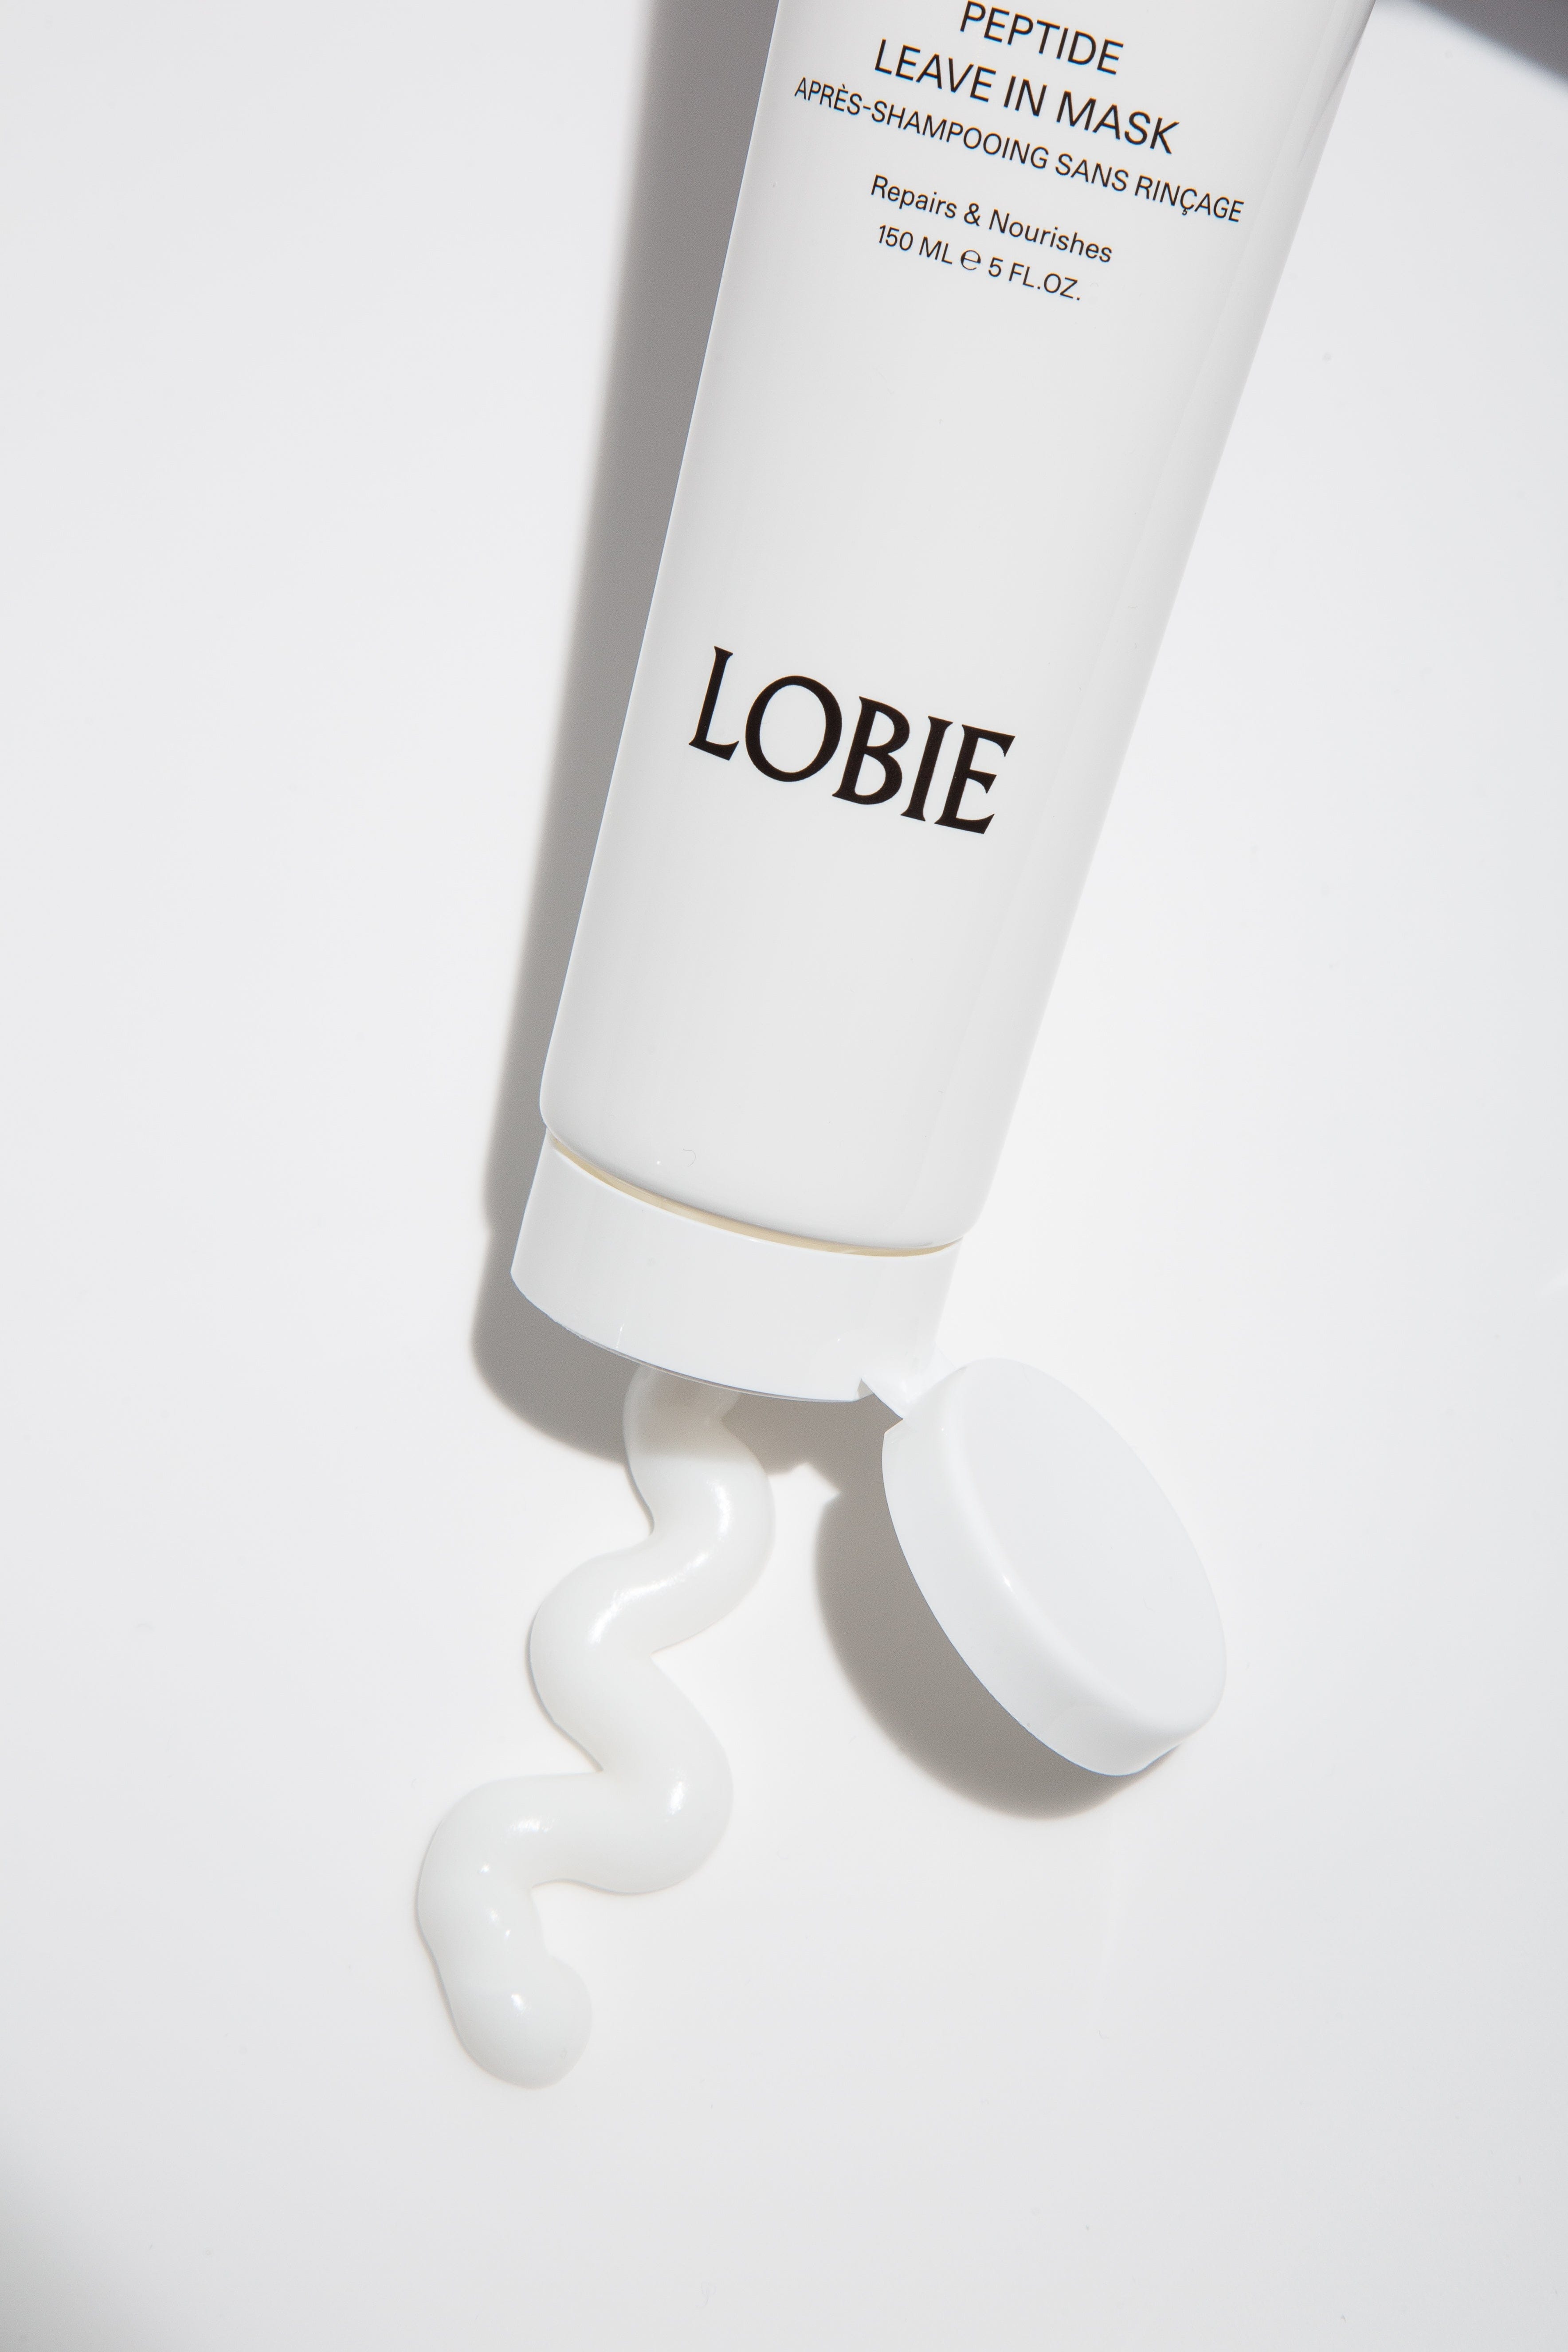 LOBIE Peptide Leave In Mask